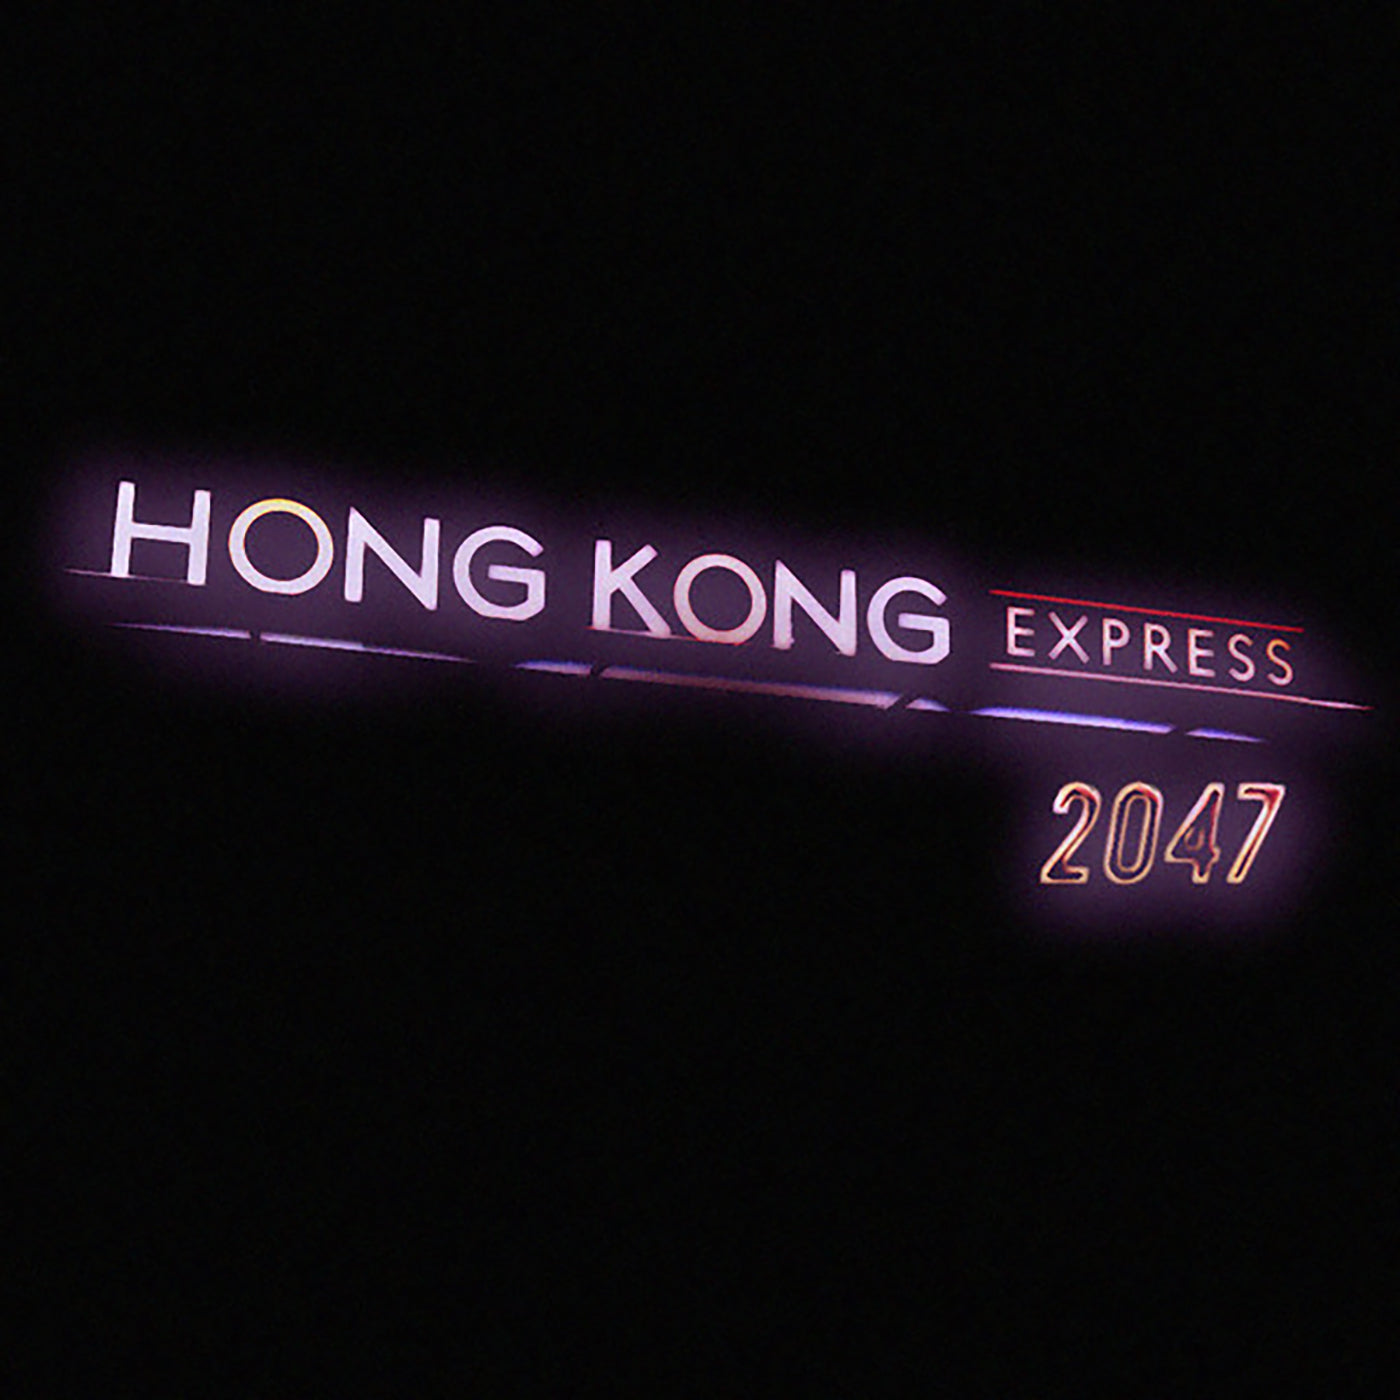 Hong Kong Express - 2047